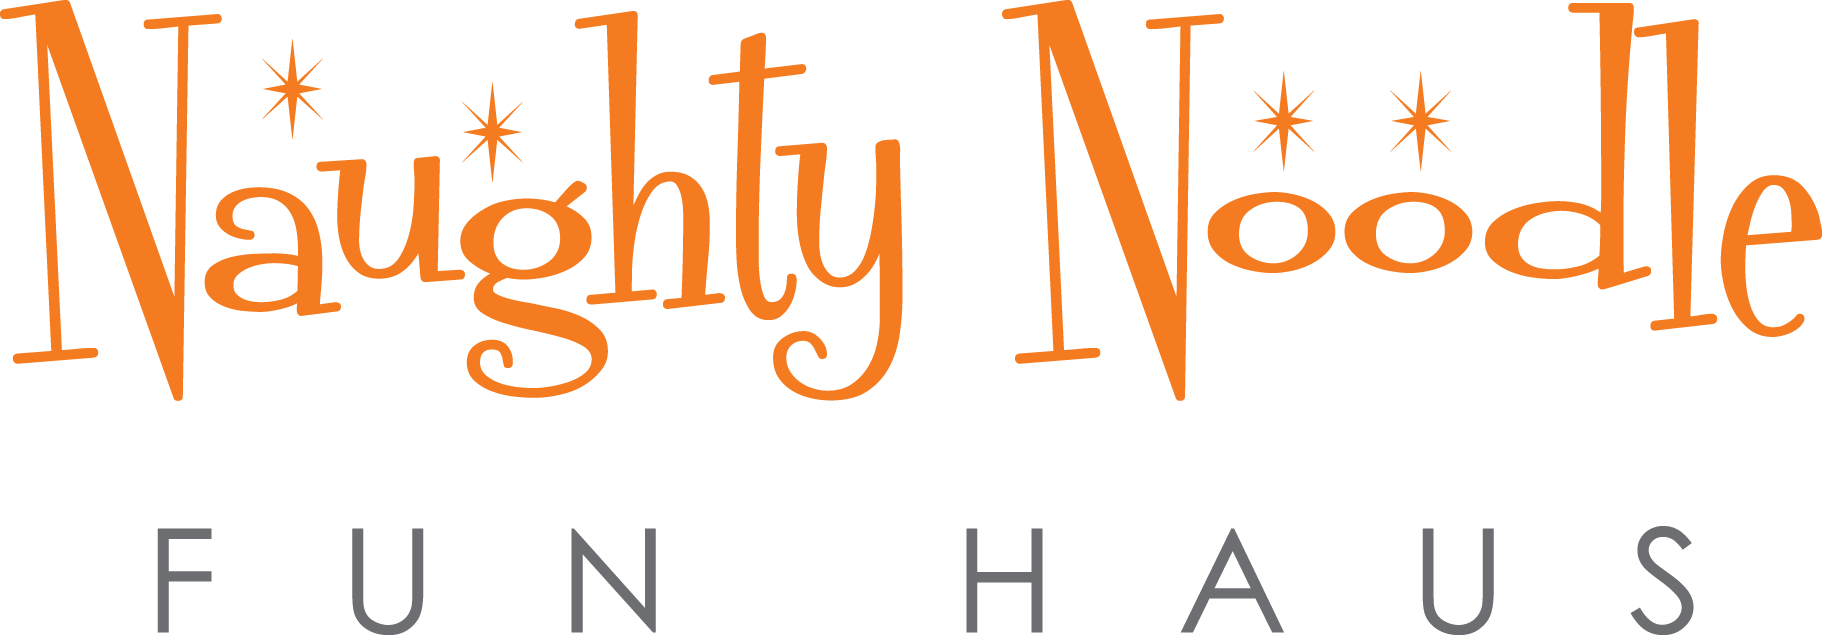 Naughty Noodle Funhaus Logo PNG